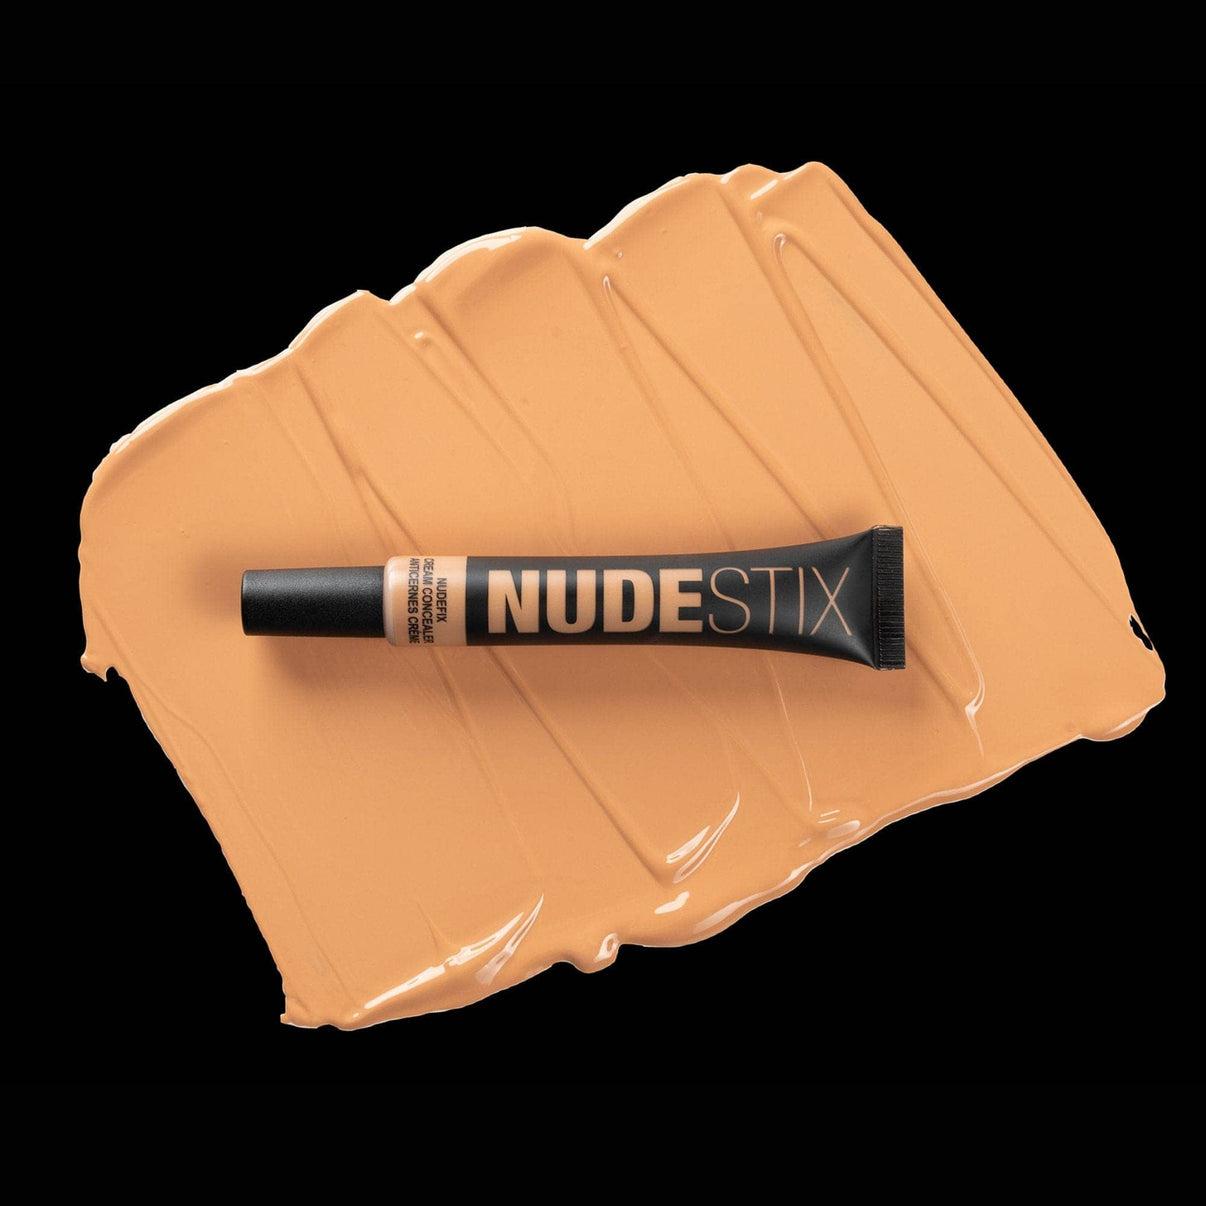 Nudefix cream concealer in shade nude 7 on top of texture swatch